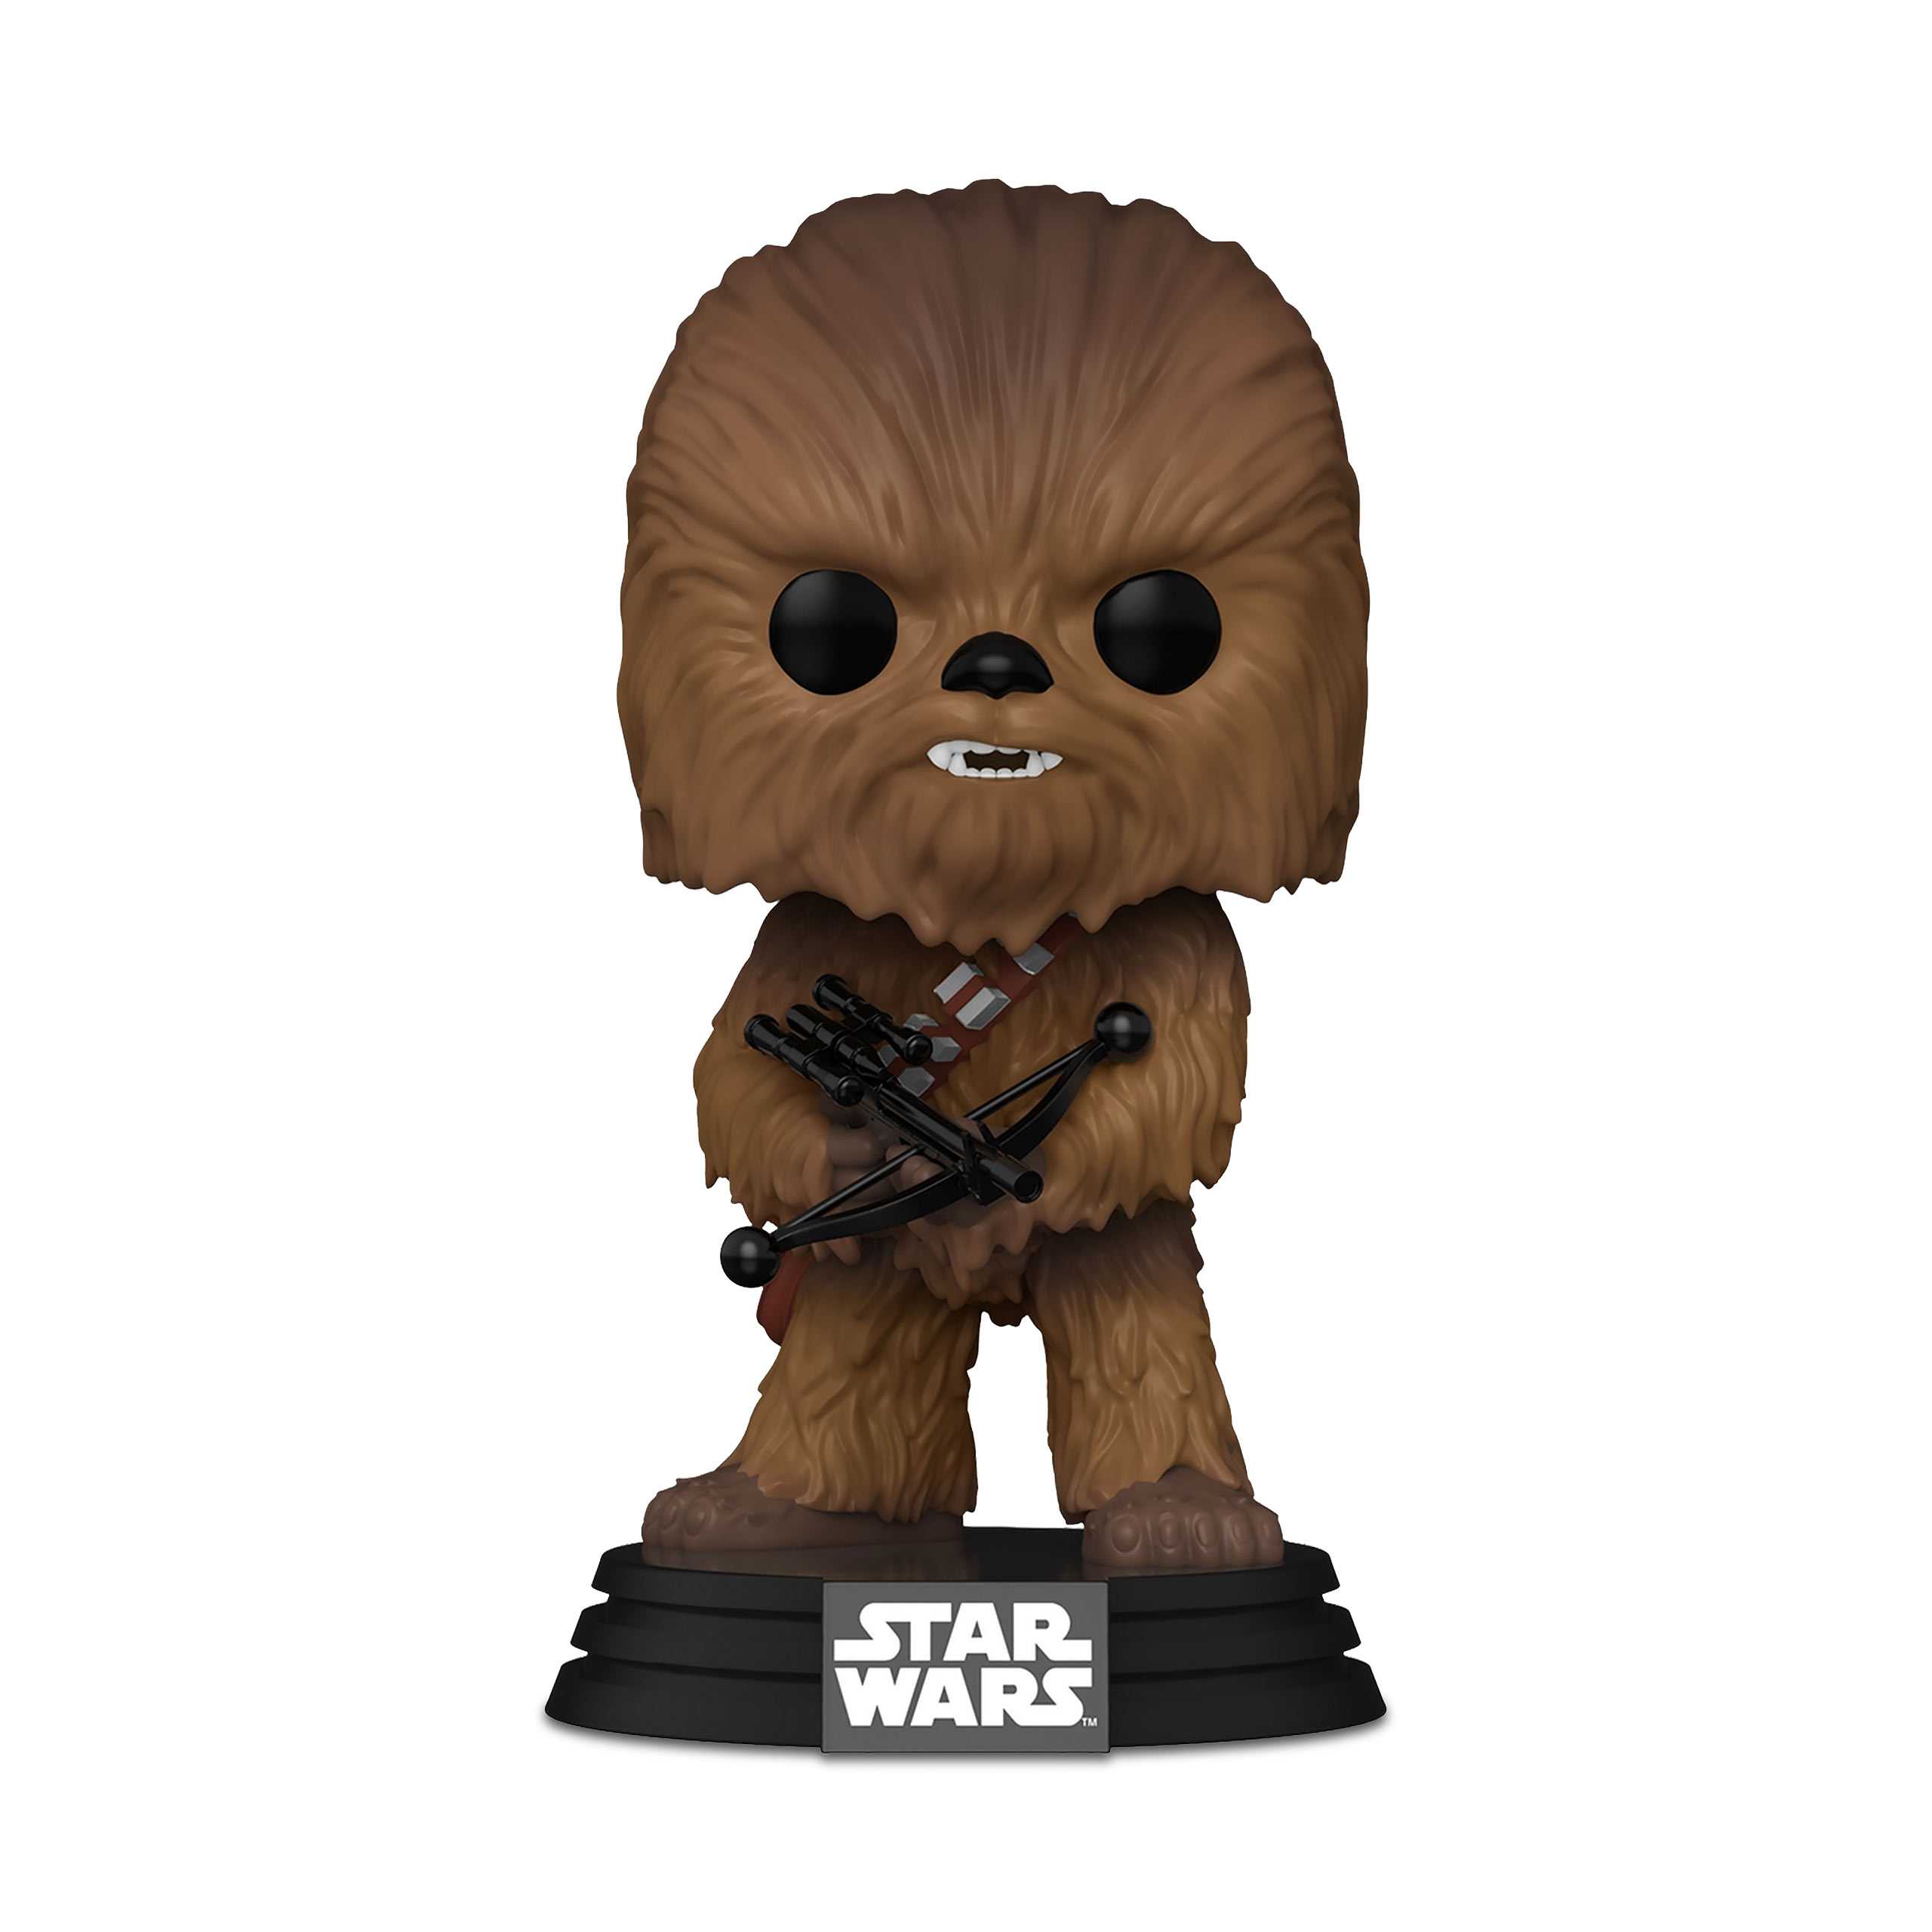 Star Wars - Figurine à tête branlante Funko Pop de Chewbacca